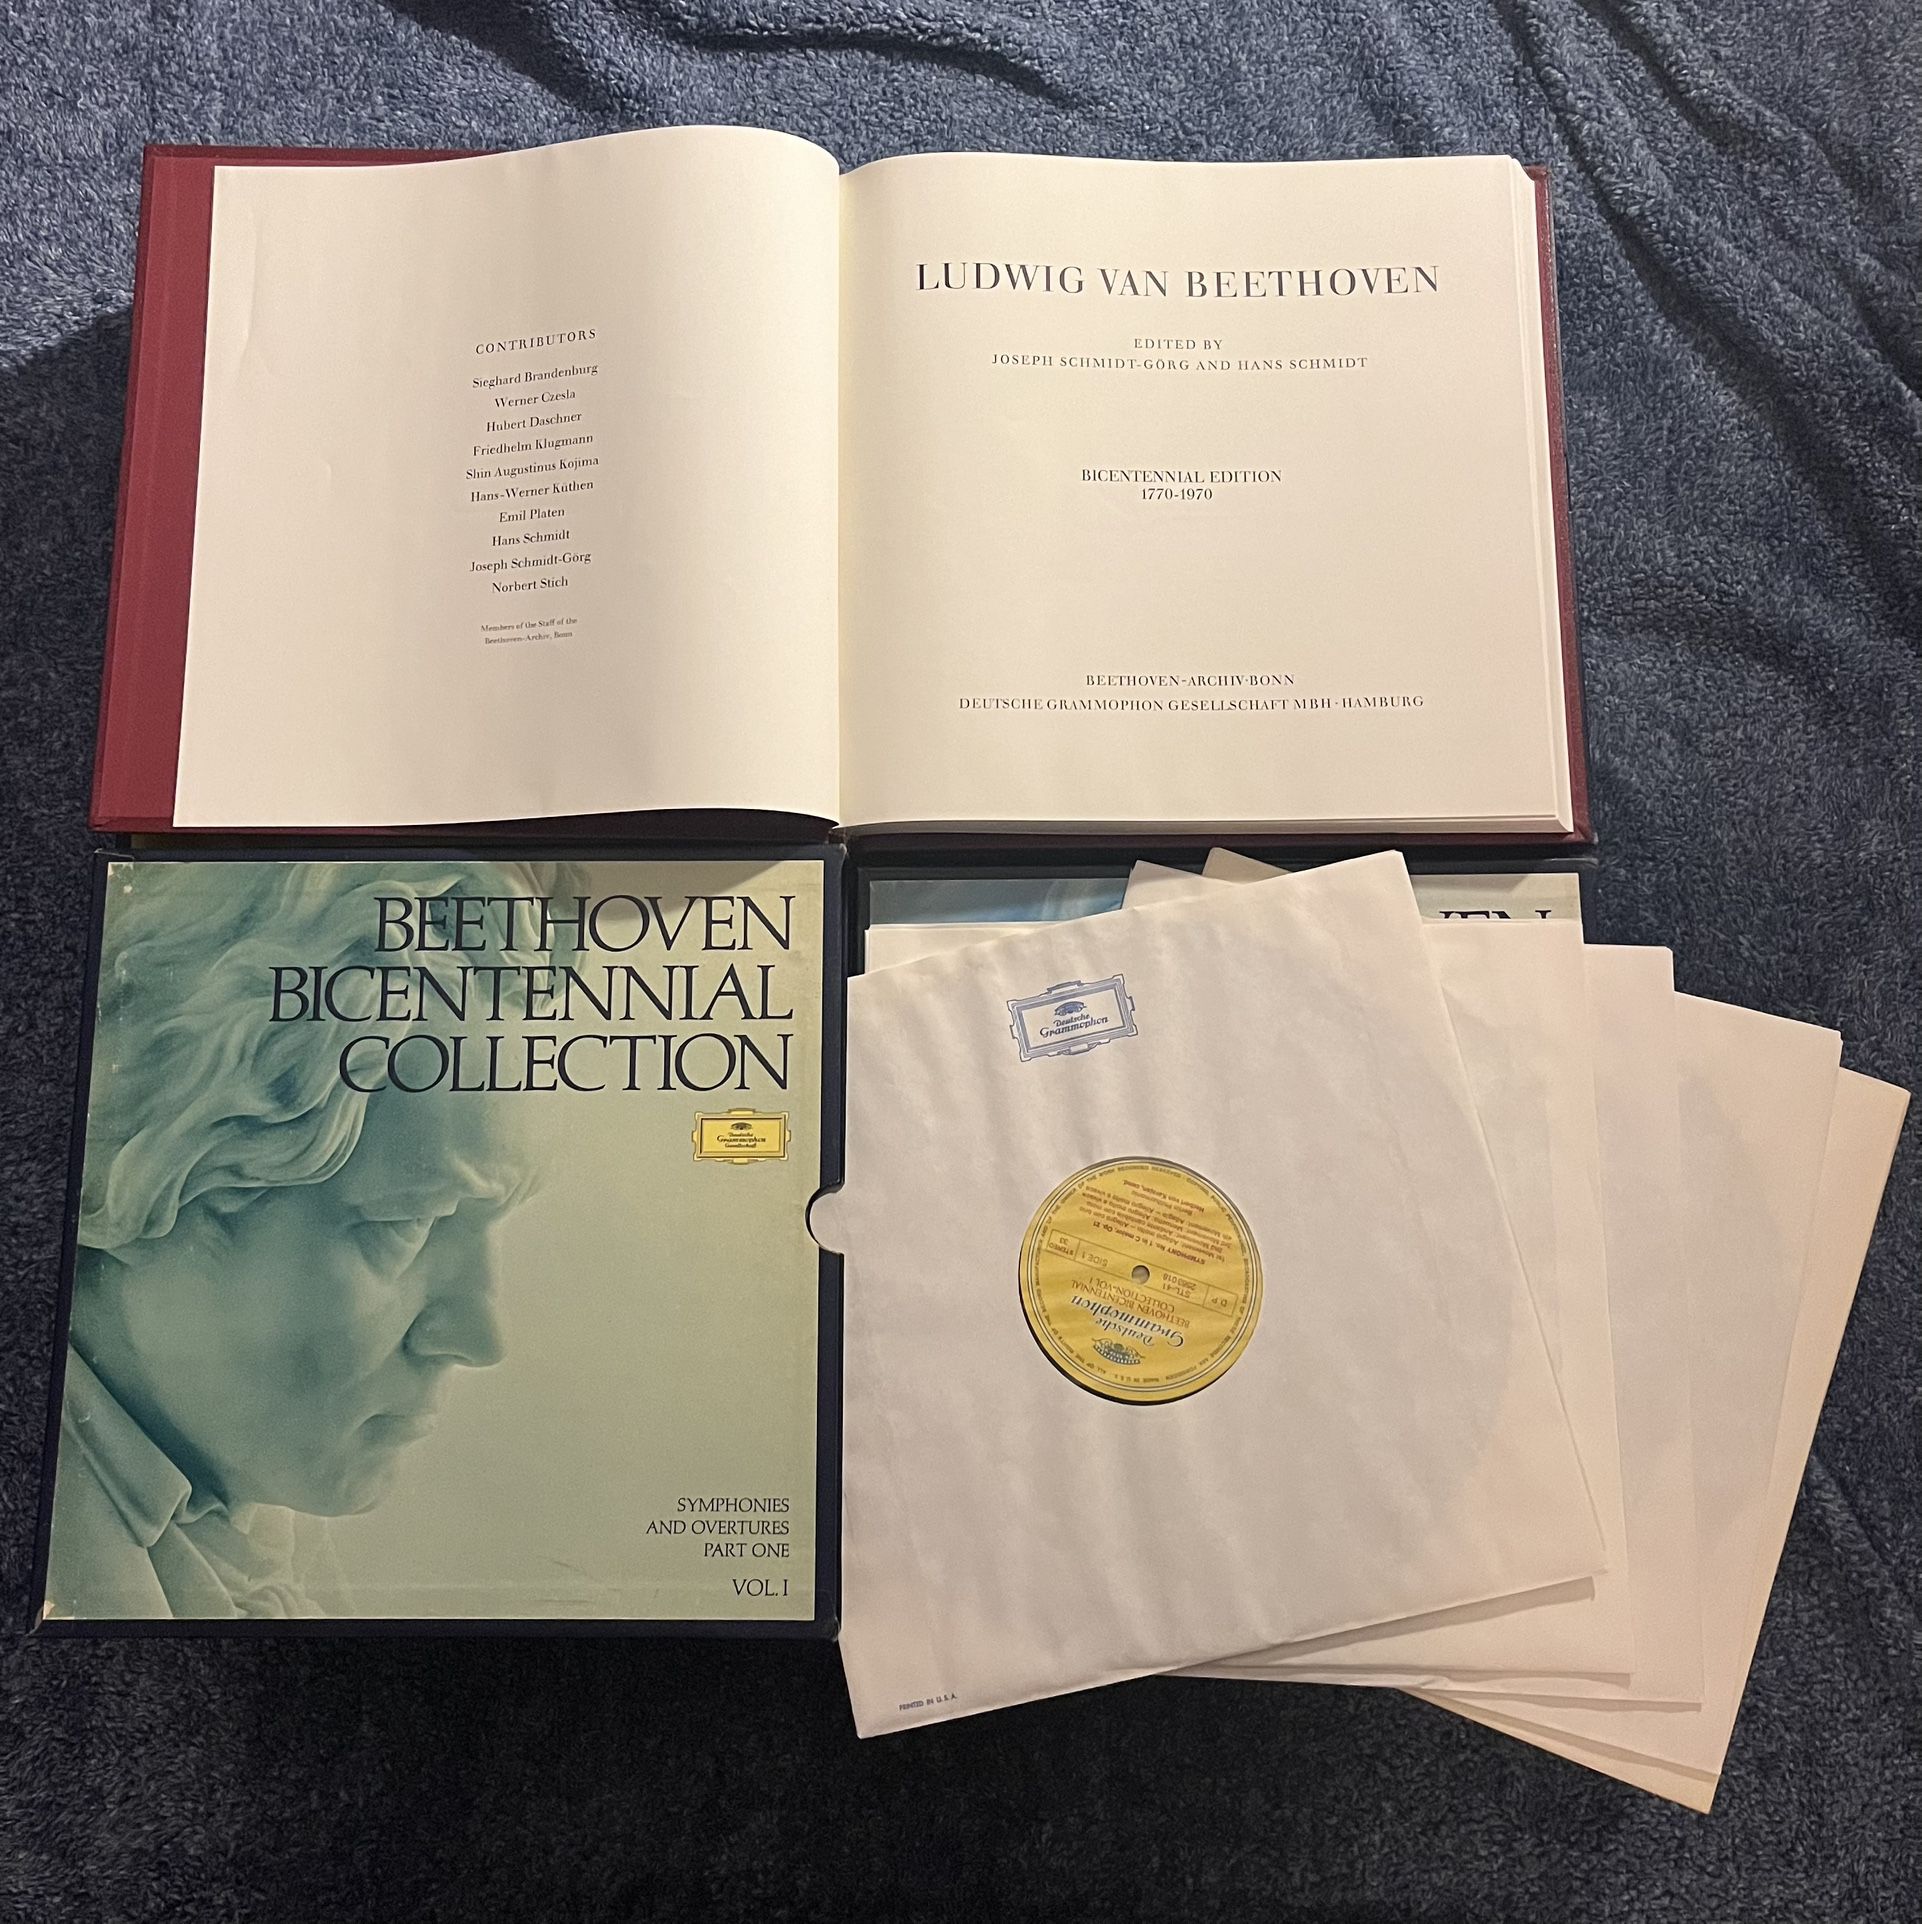 Beethoven Bicentennial Collection Vol1-14 - 5disc Sets Vinyl Records